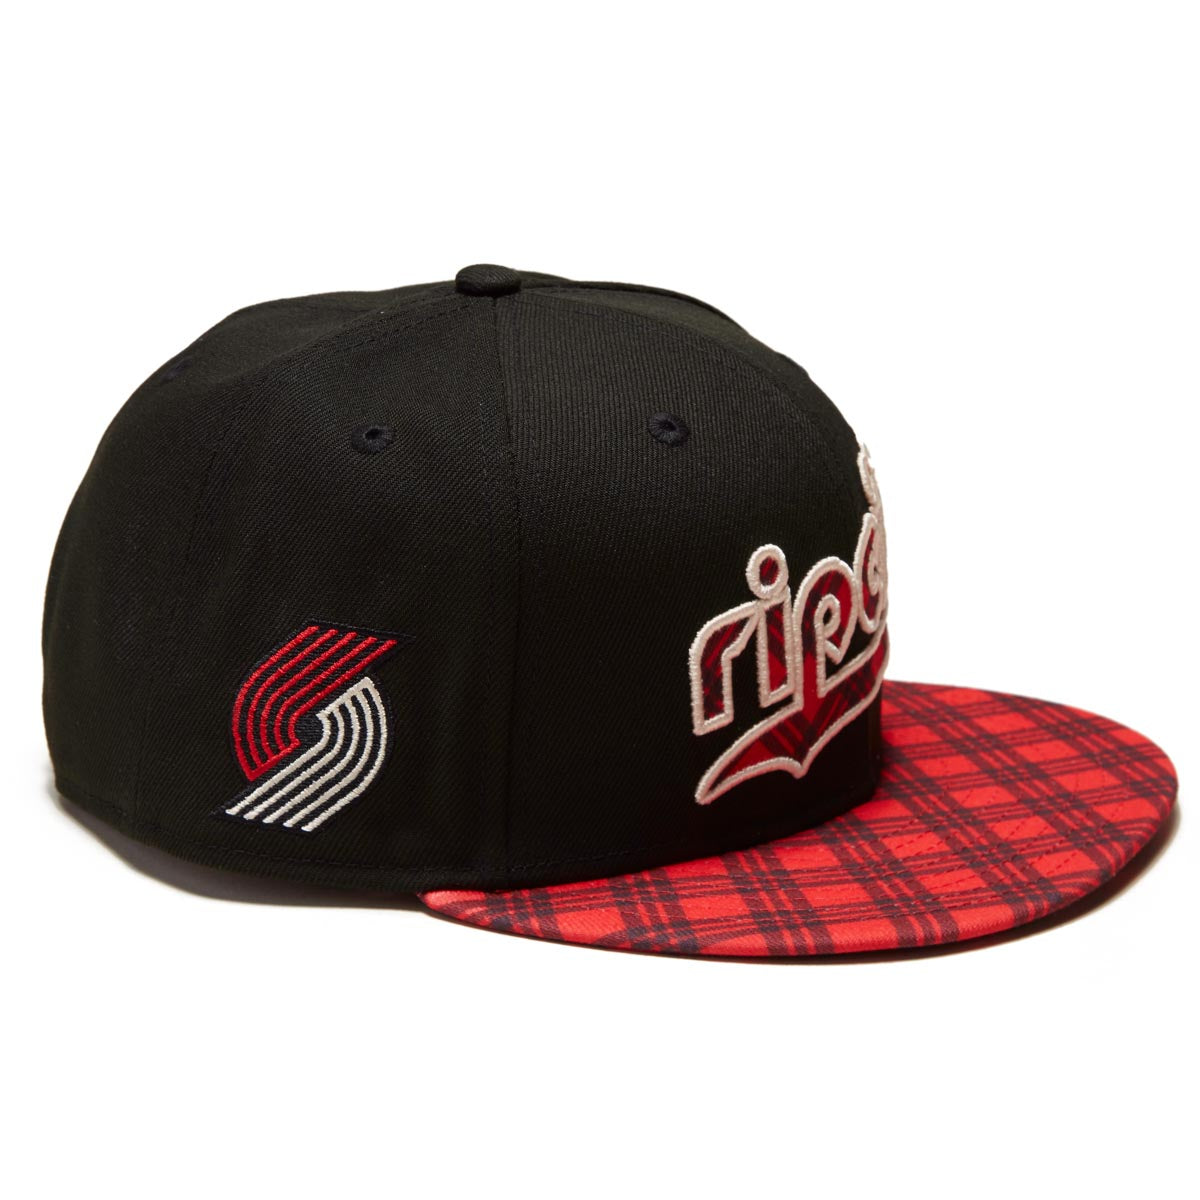 New Era x NBA 950 23 Portland Blazers Hat - Black/Red image 3